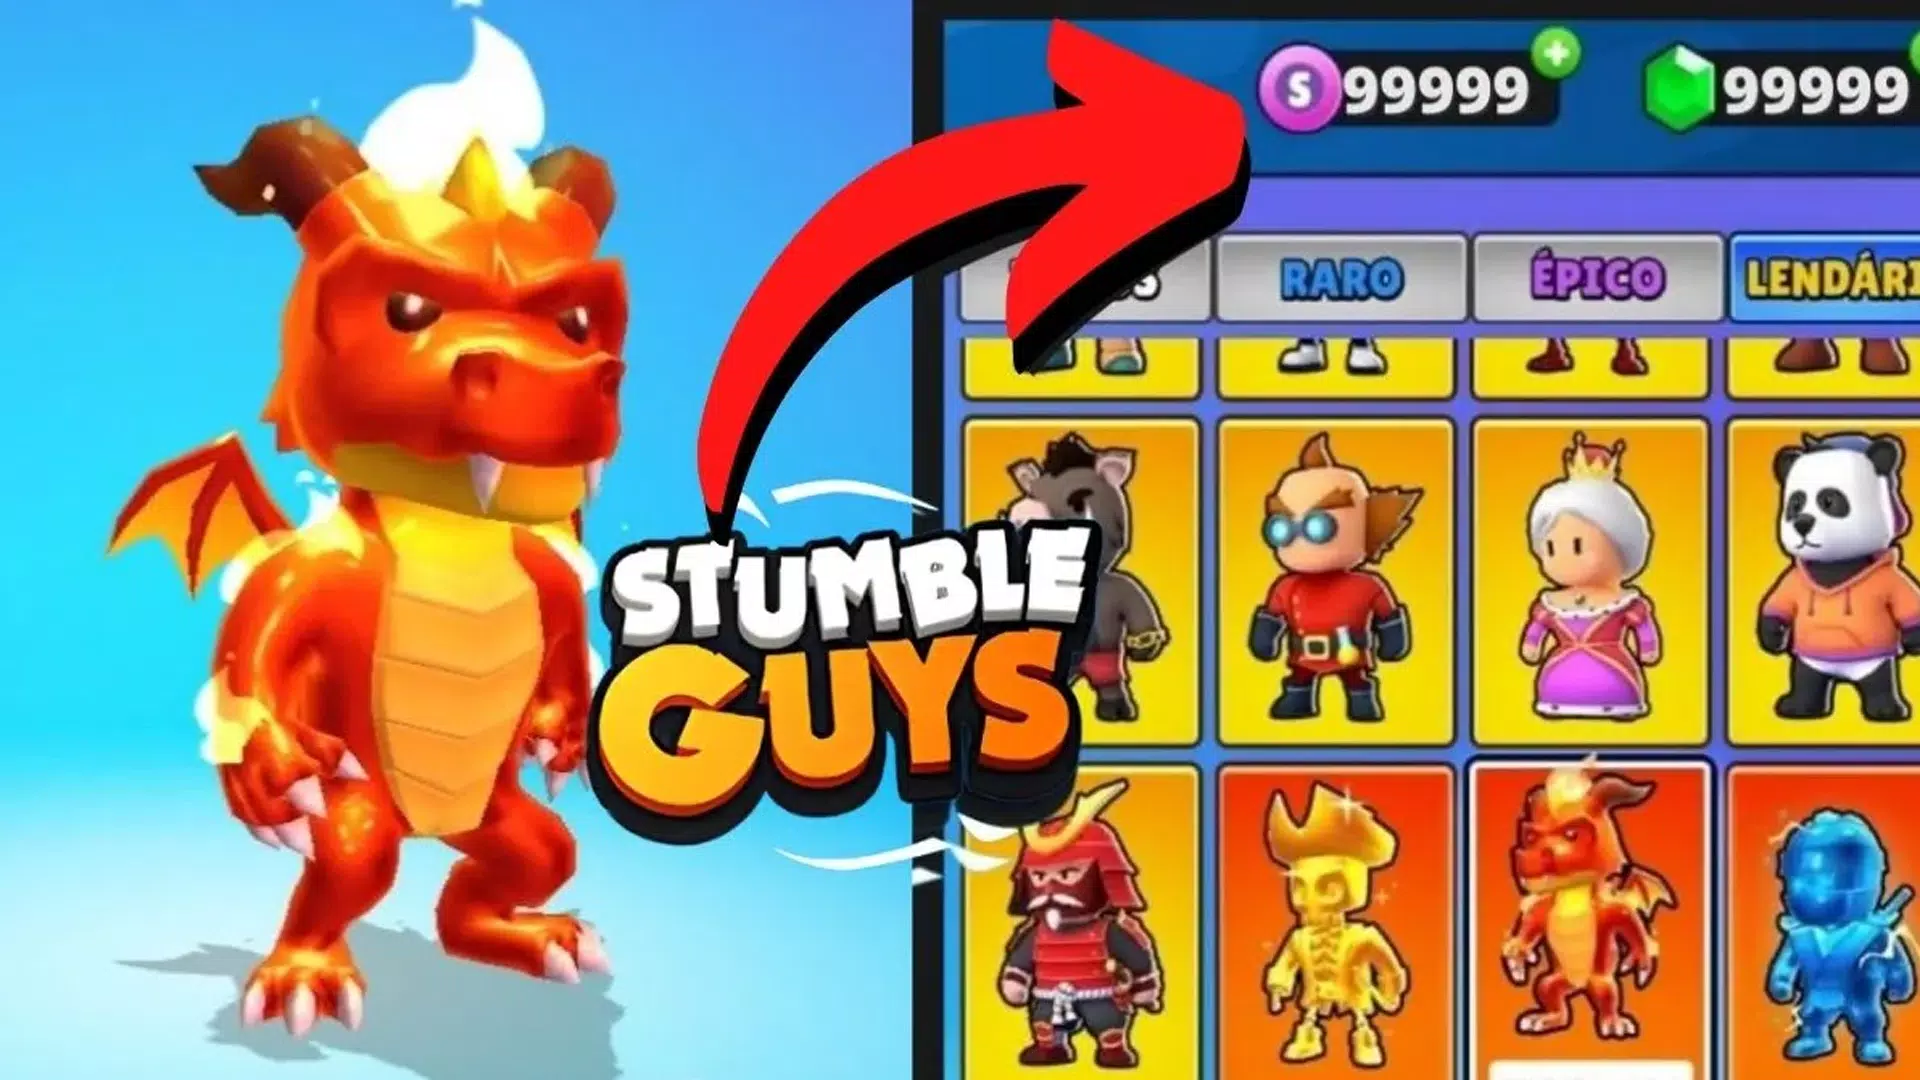 Stumble Guys Mod Apk 0.55.1 Unlimited Gems Download Latest Version